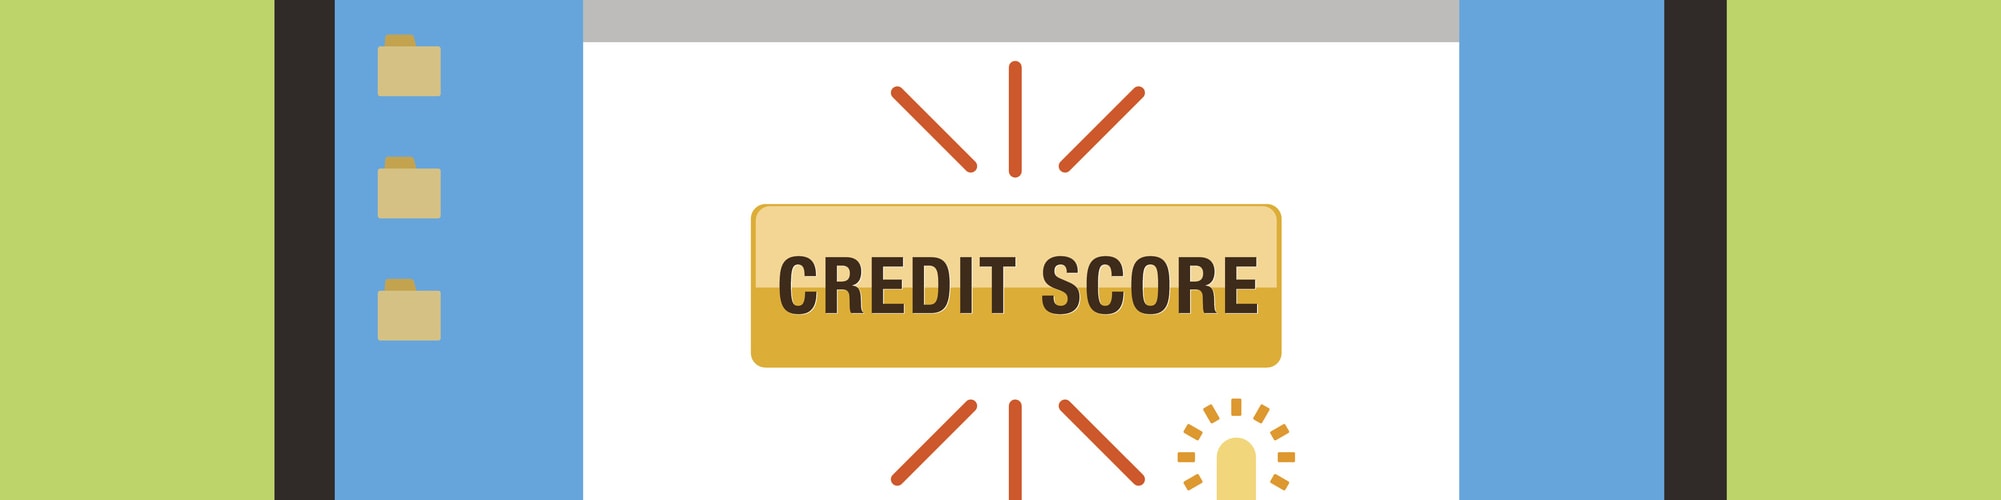 credit score button